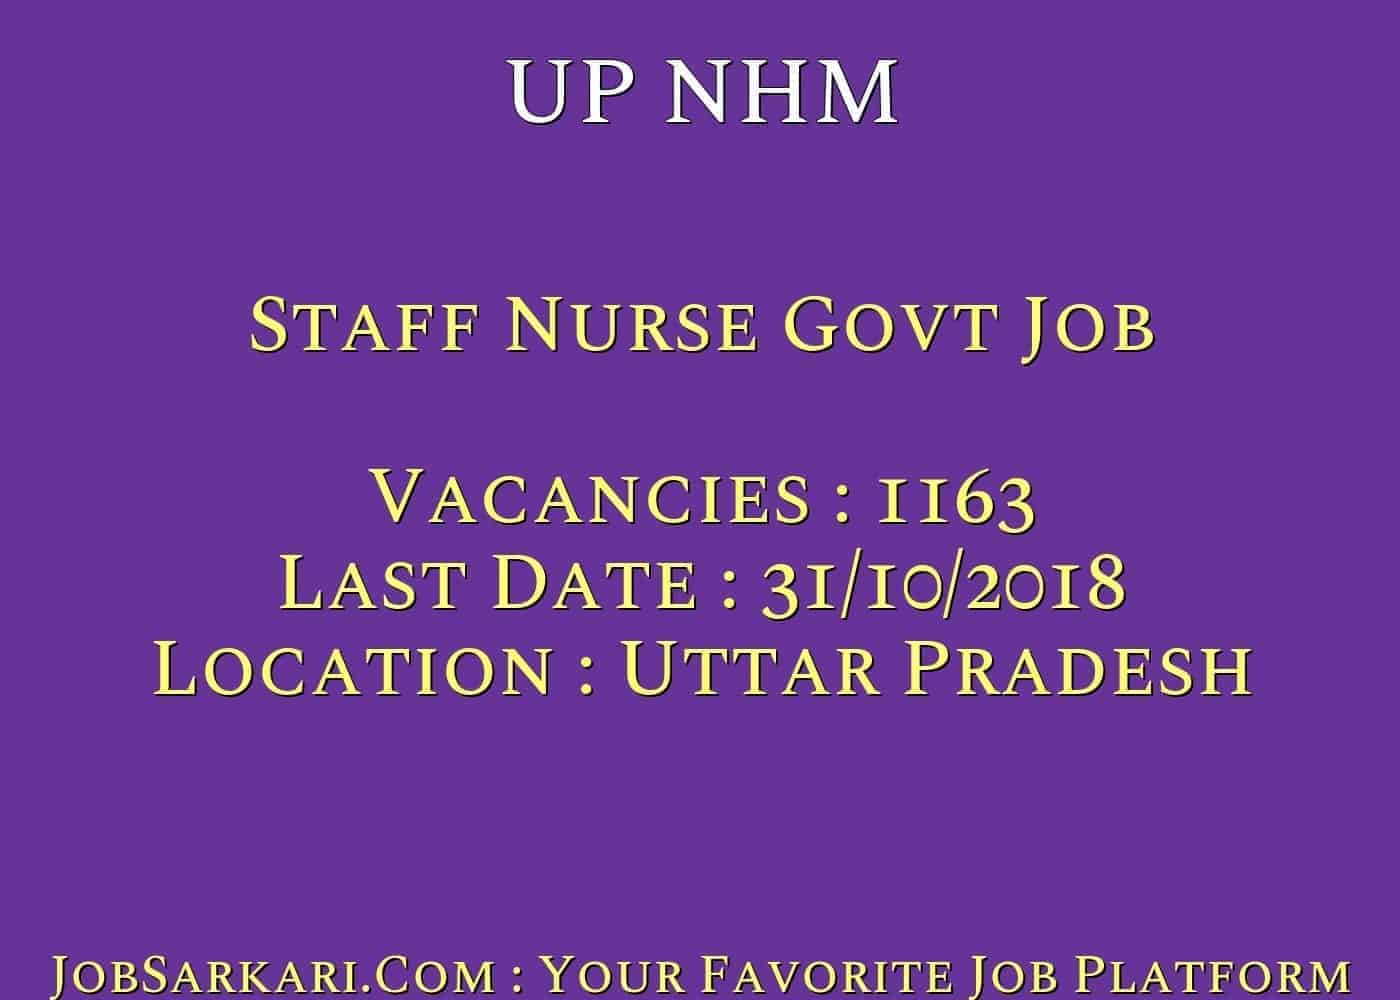 UP NHM Recruitment 2018 for Staff Nurse Govt Job